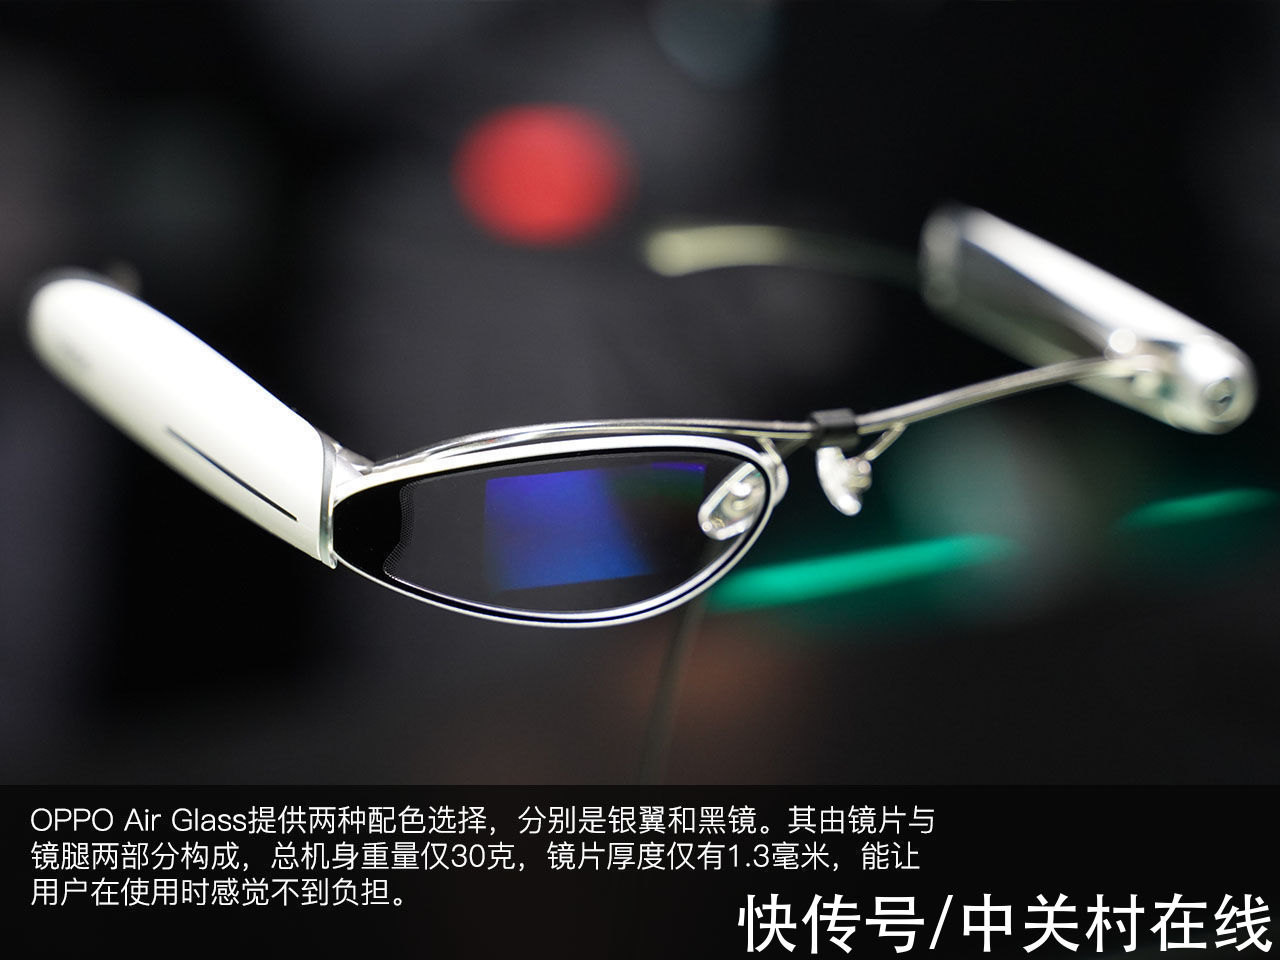 oppo|重量轻至30克 OPPO新一代智能眼镜OPPO Air Glass发布